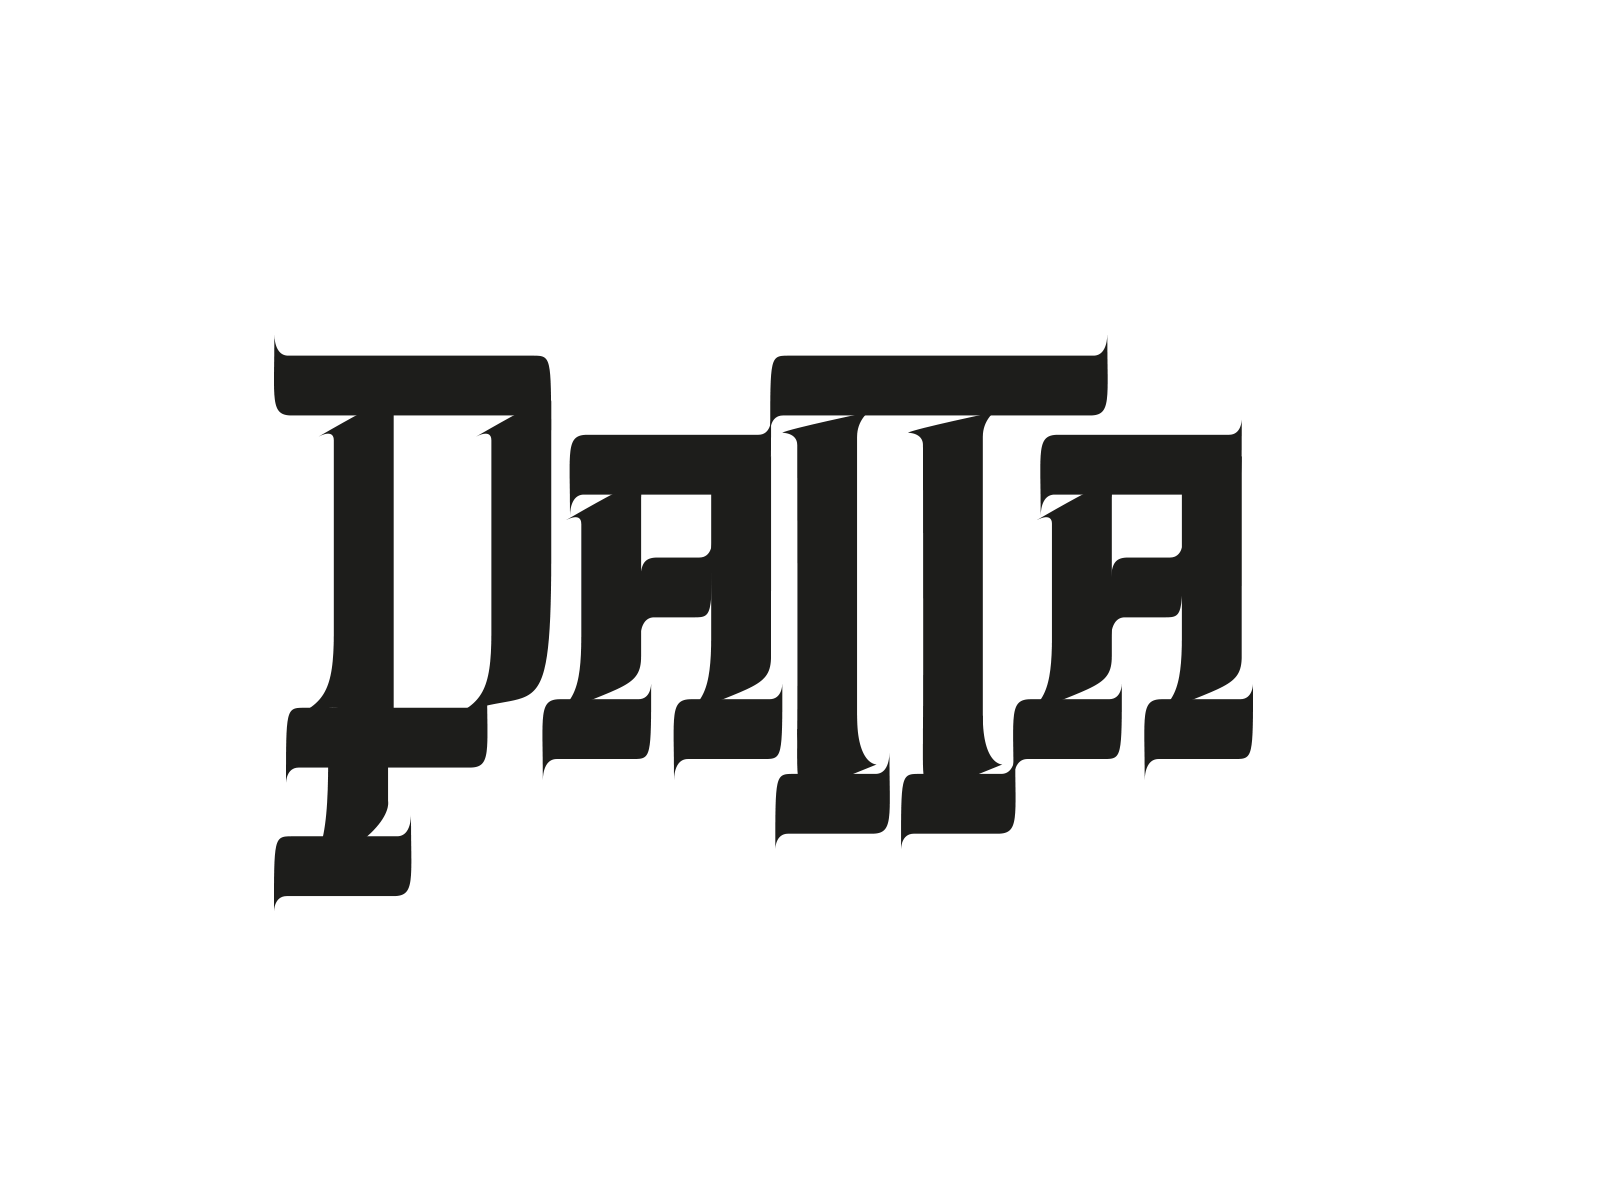 Patta logo